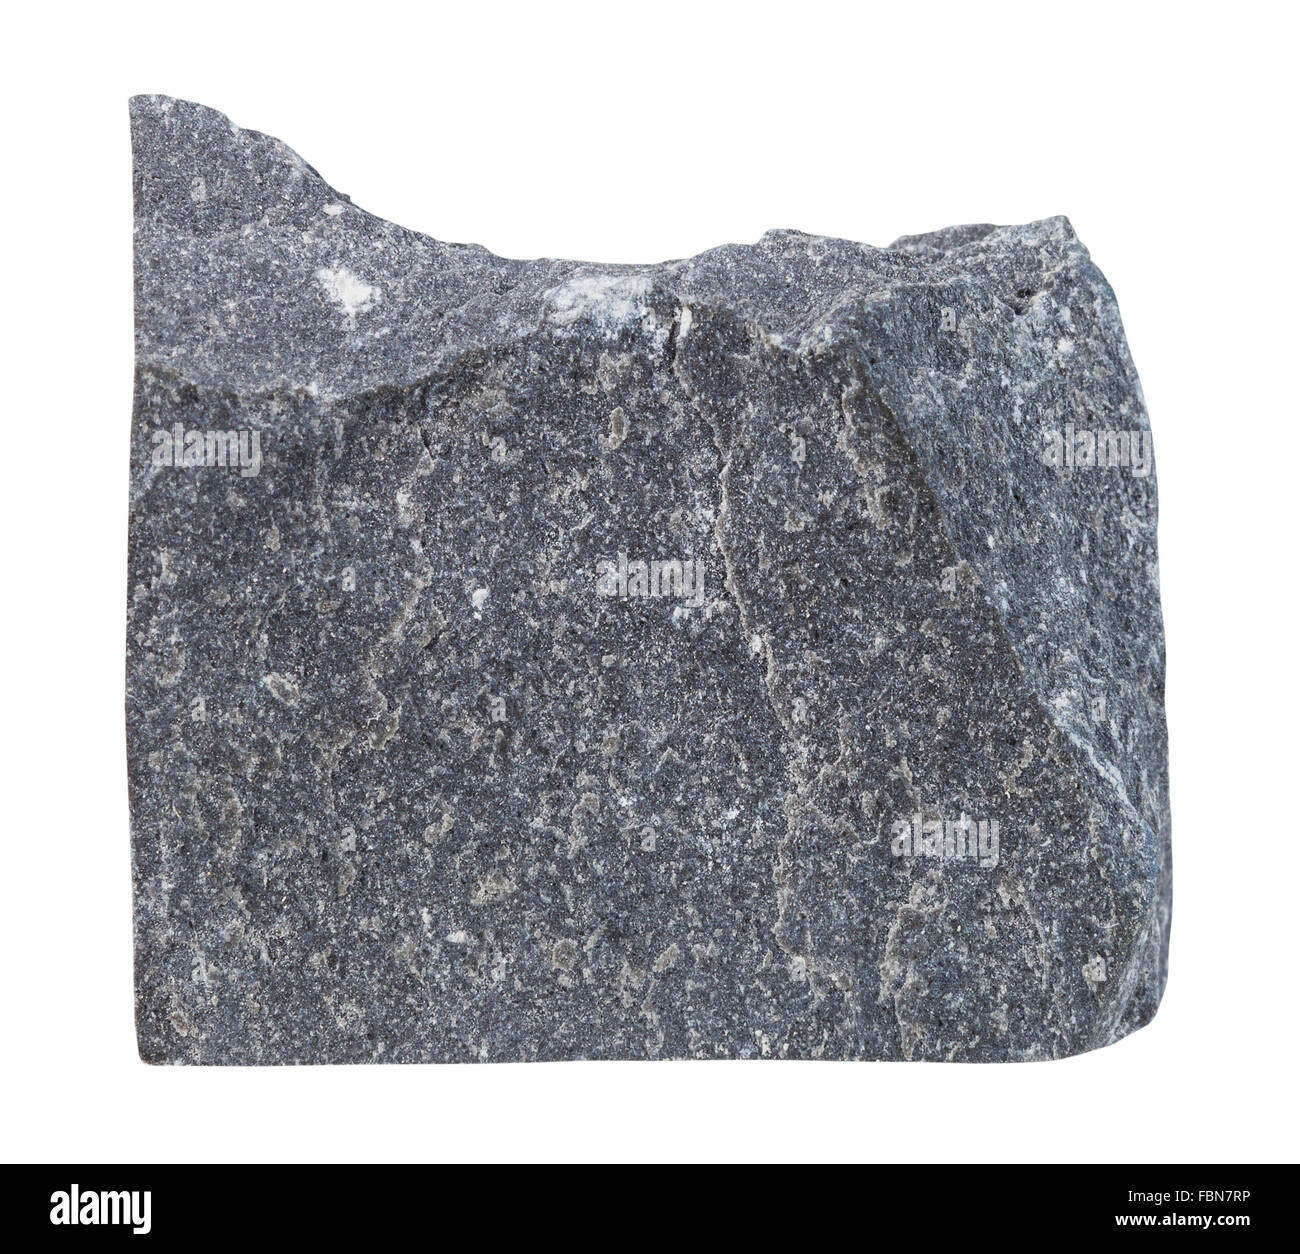 https://c8.alamy.com/comp/FBN7RP/macro-shooting-of-specimen-natural-rock-slate-mineral-stone-isolated-FBN7RP.jpg